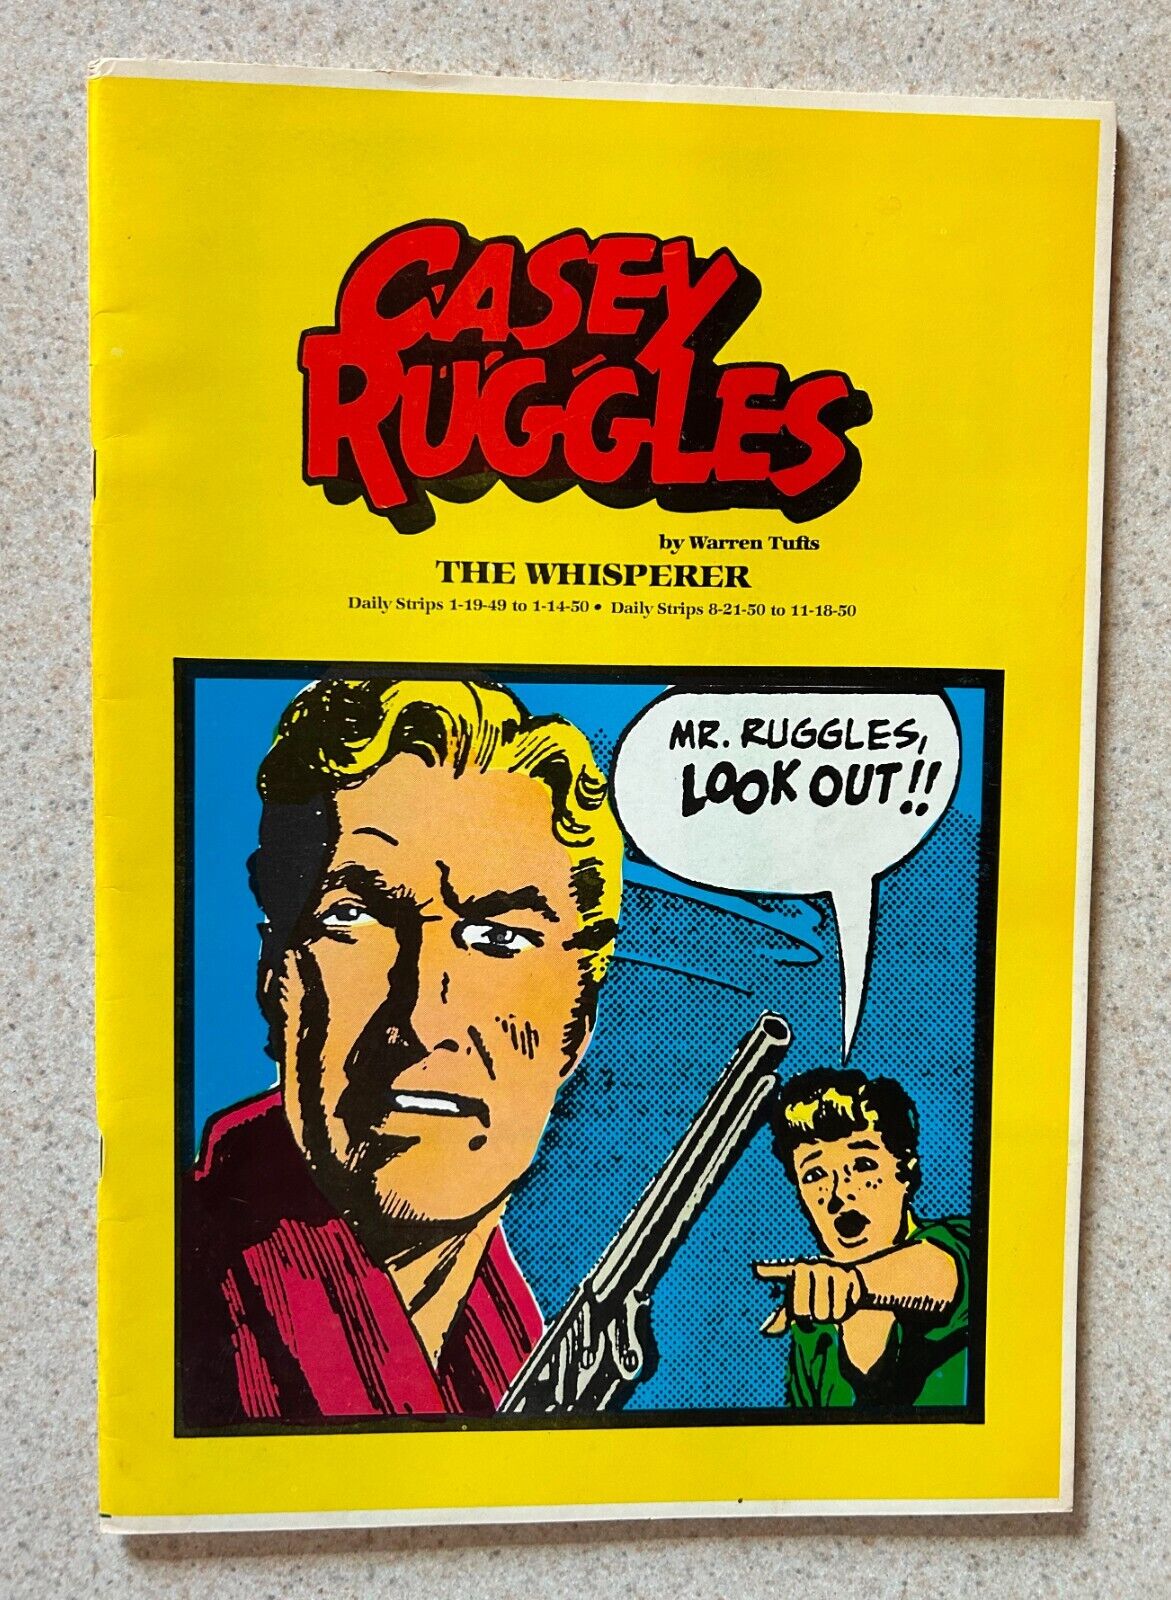 CASEY RUGGLES #4 The Whisperer (1981 Western Wind) - Warren Tufts Treasury Sized